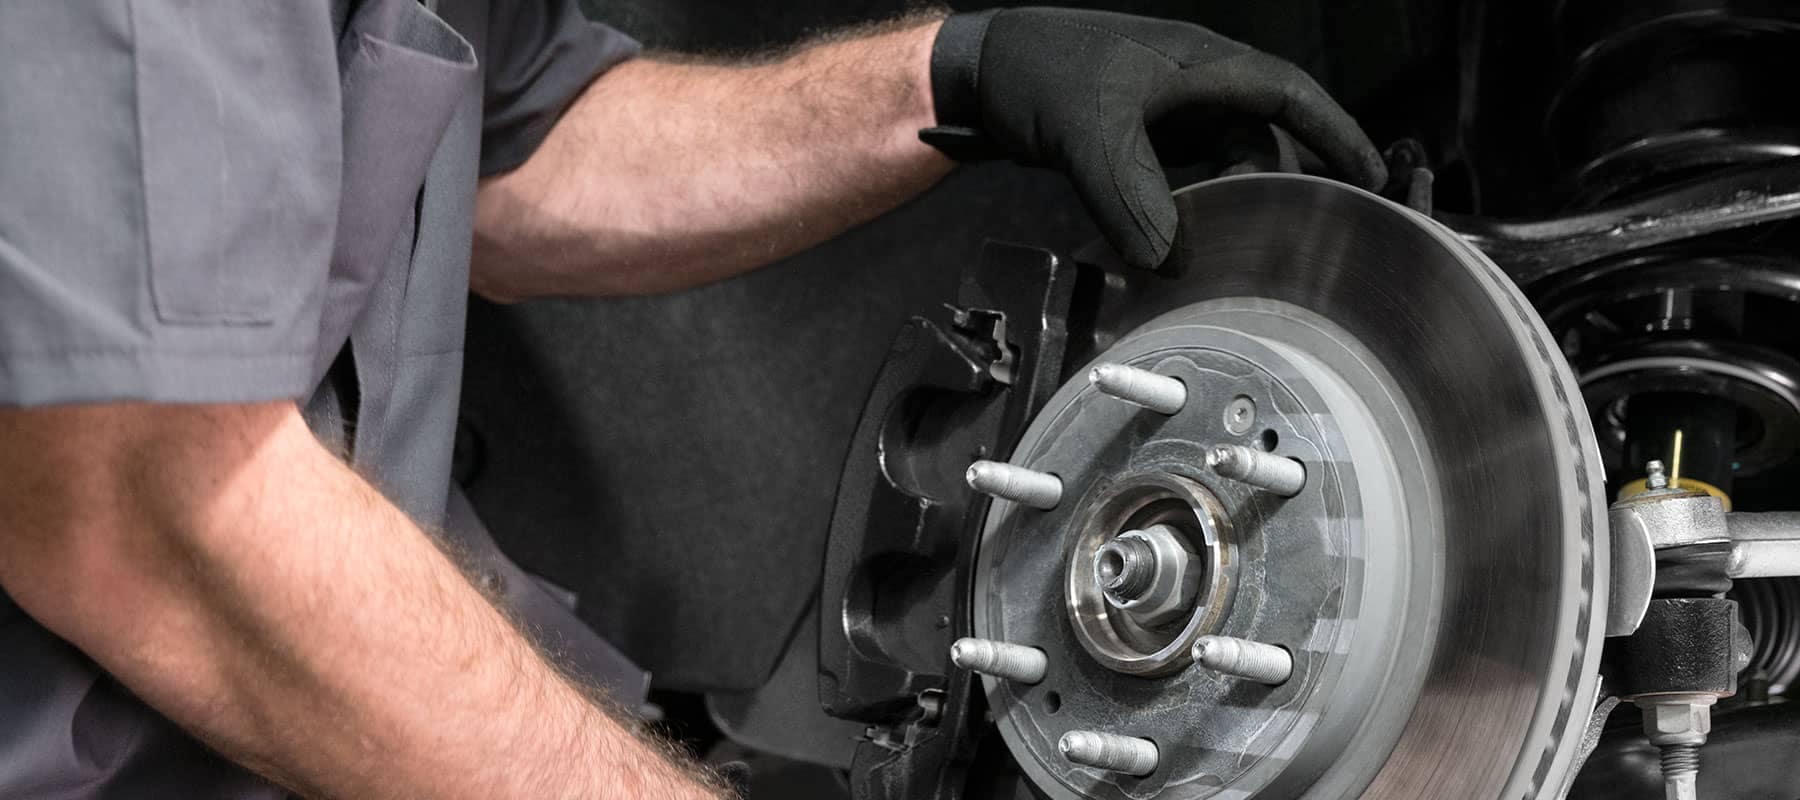 GM Service Technician Installing Brakes